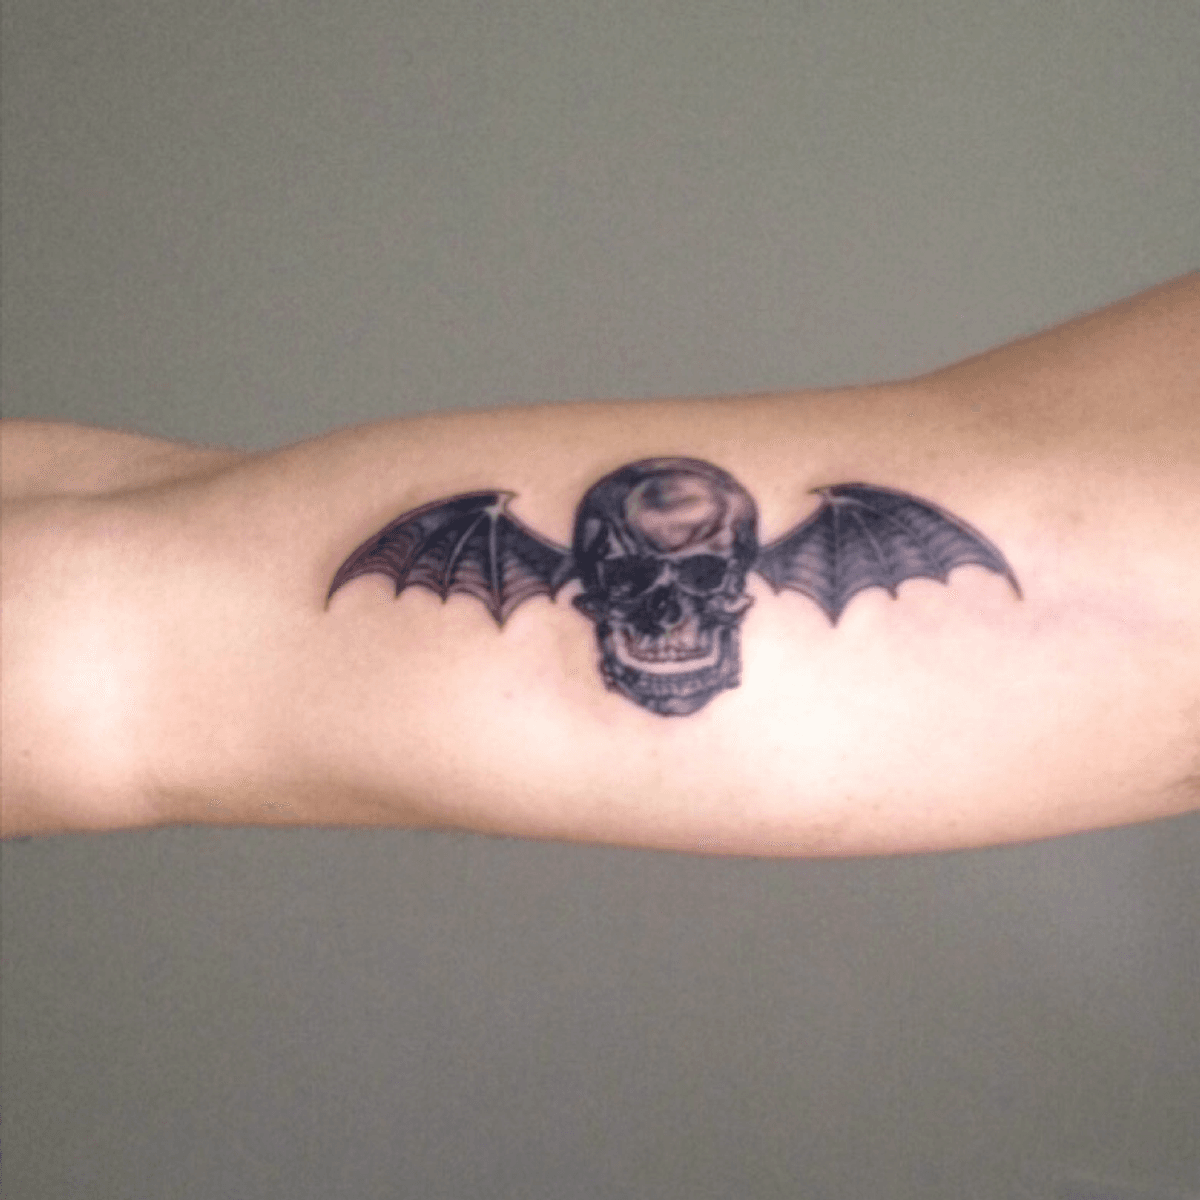 Tattoo uploaded by JackJD • Tattoo made by -Marcin Art in Farnborough.  Great artist and great tattoos! #a7x #avengedsevenfold #tattoo #bicep #cool  #notlast #metal #black #blackAndWhite #mybody #design #tattoodesign  #tattooart #arm #armtattoos #